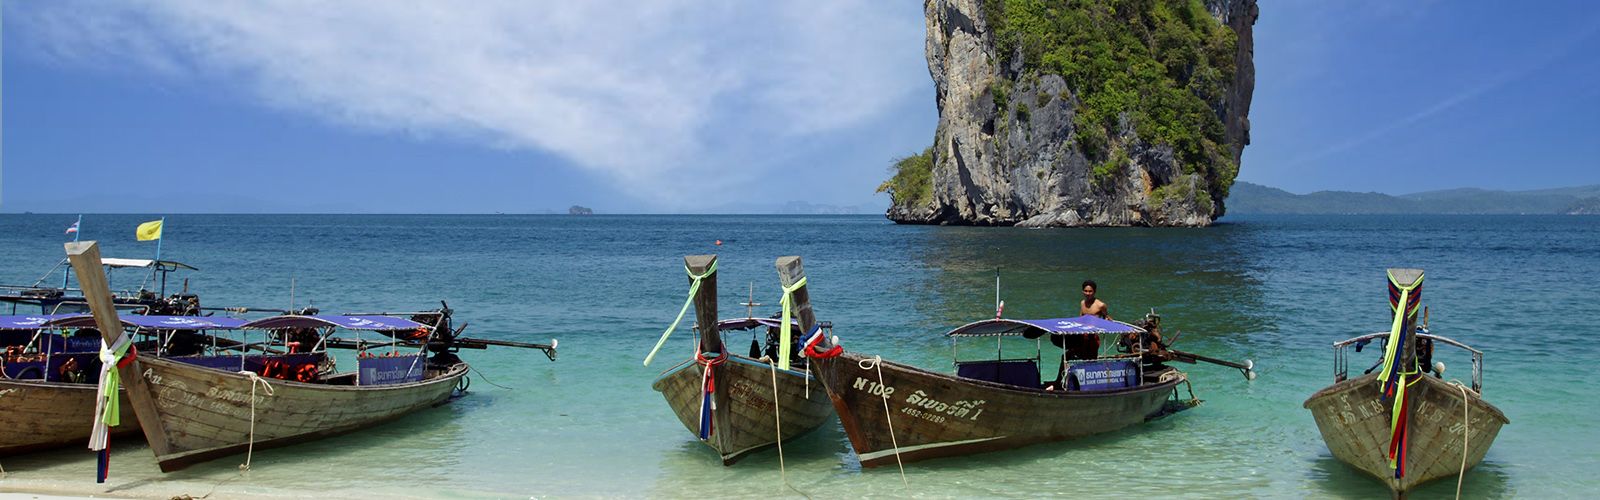 Krabi  Travel Guide | Asianventure Tours